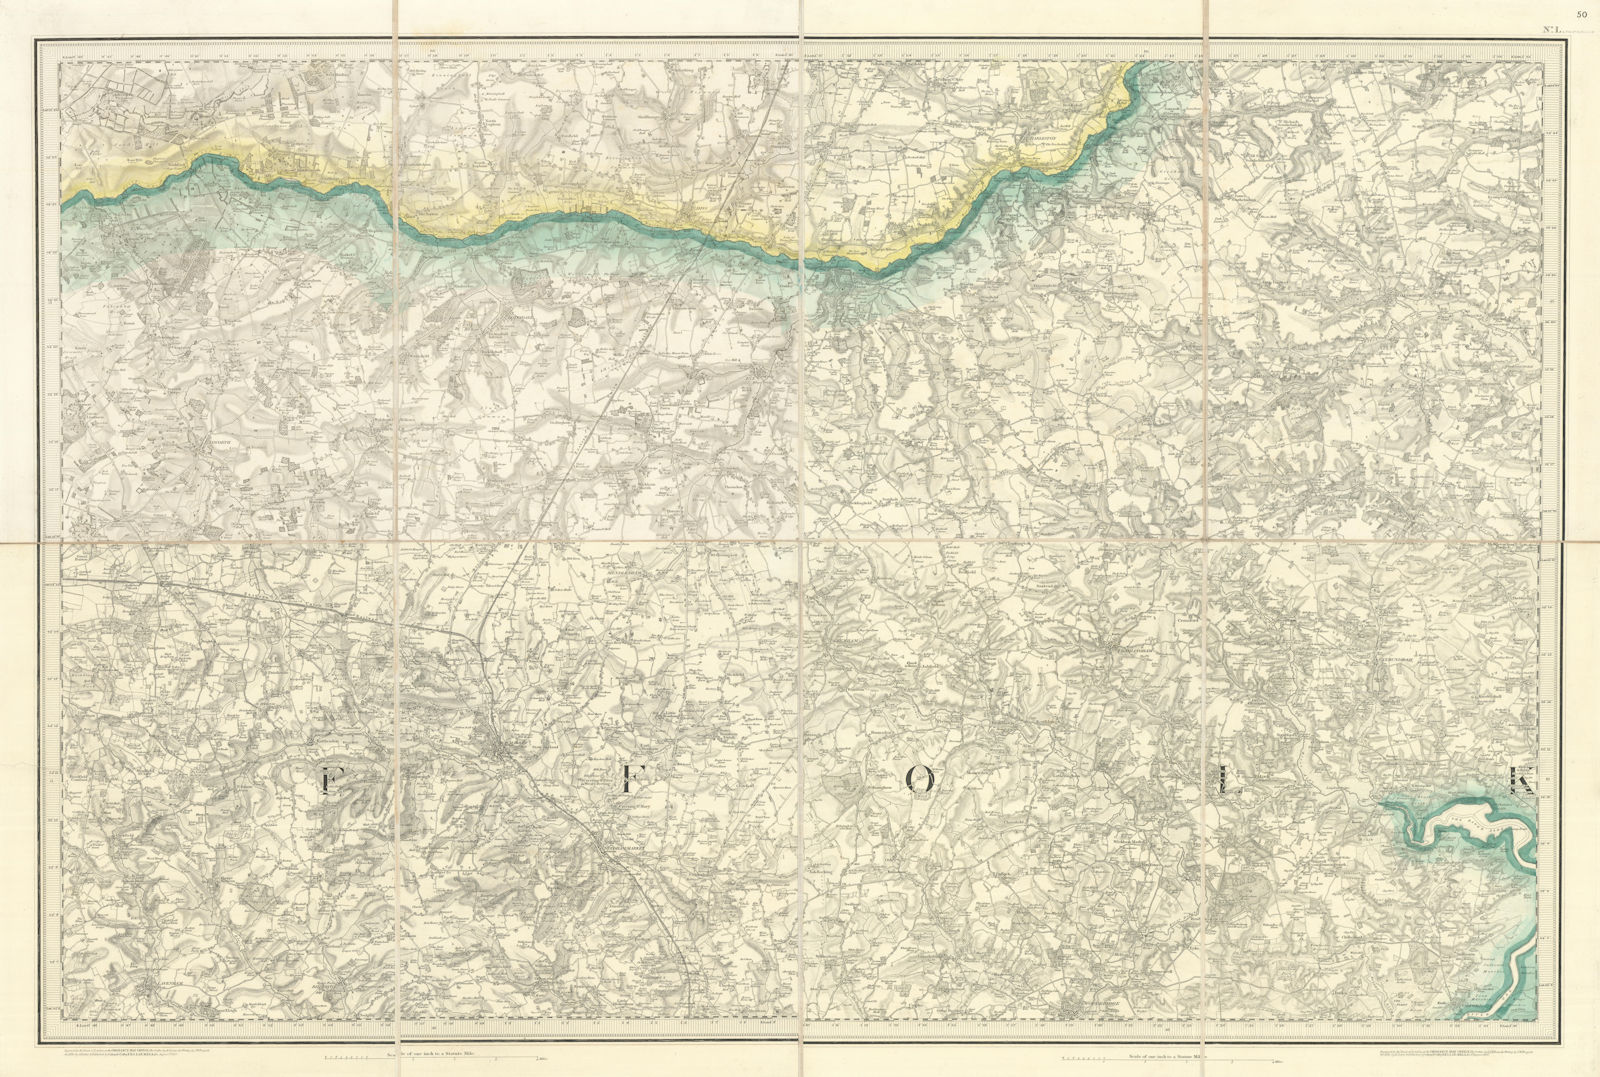 OS #50 High Suffolk Claylands. Eye lxworth Harleston Diss Stowmarket 1837 map